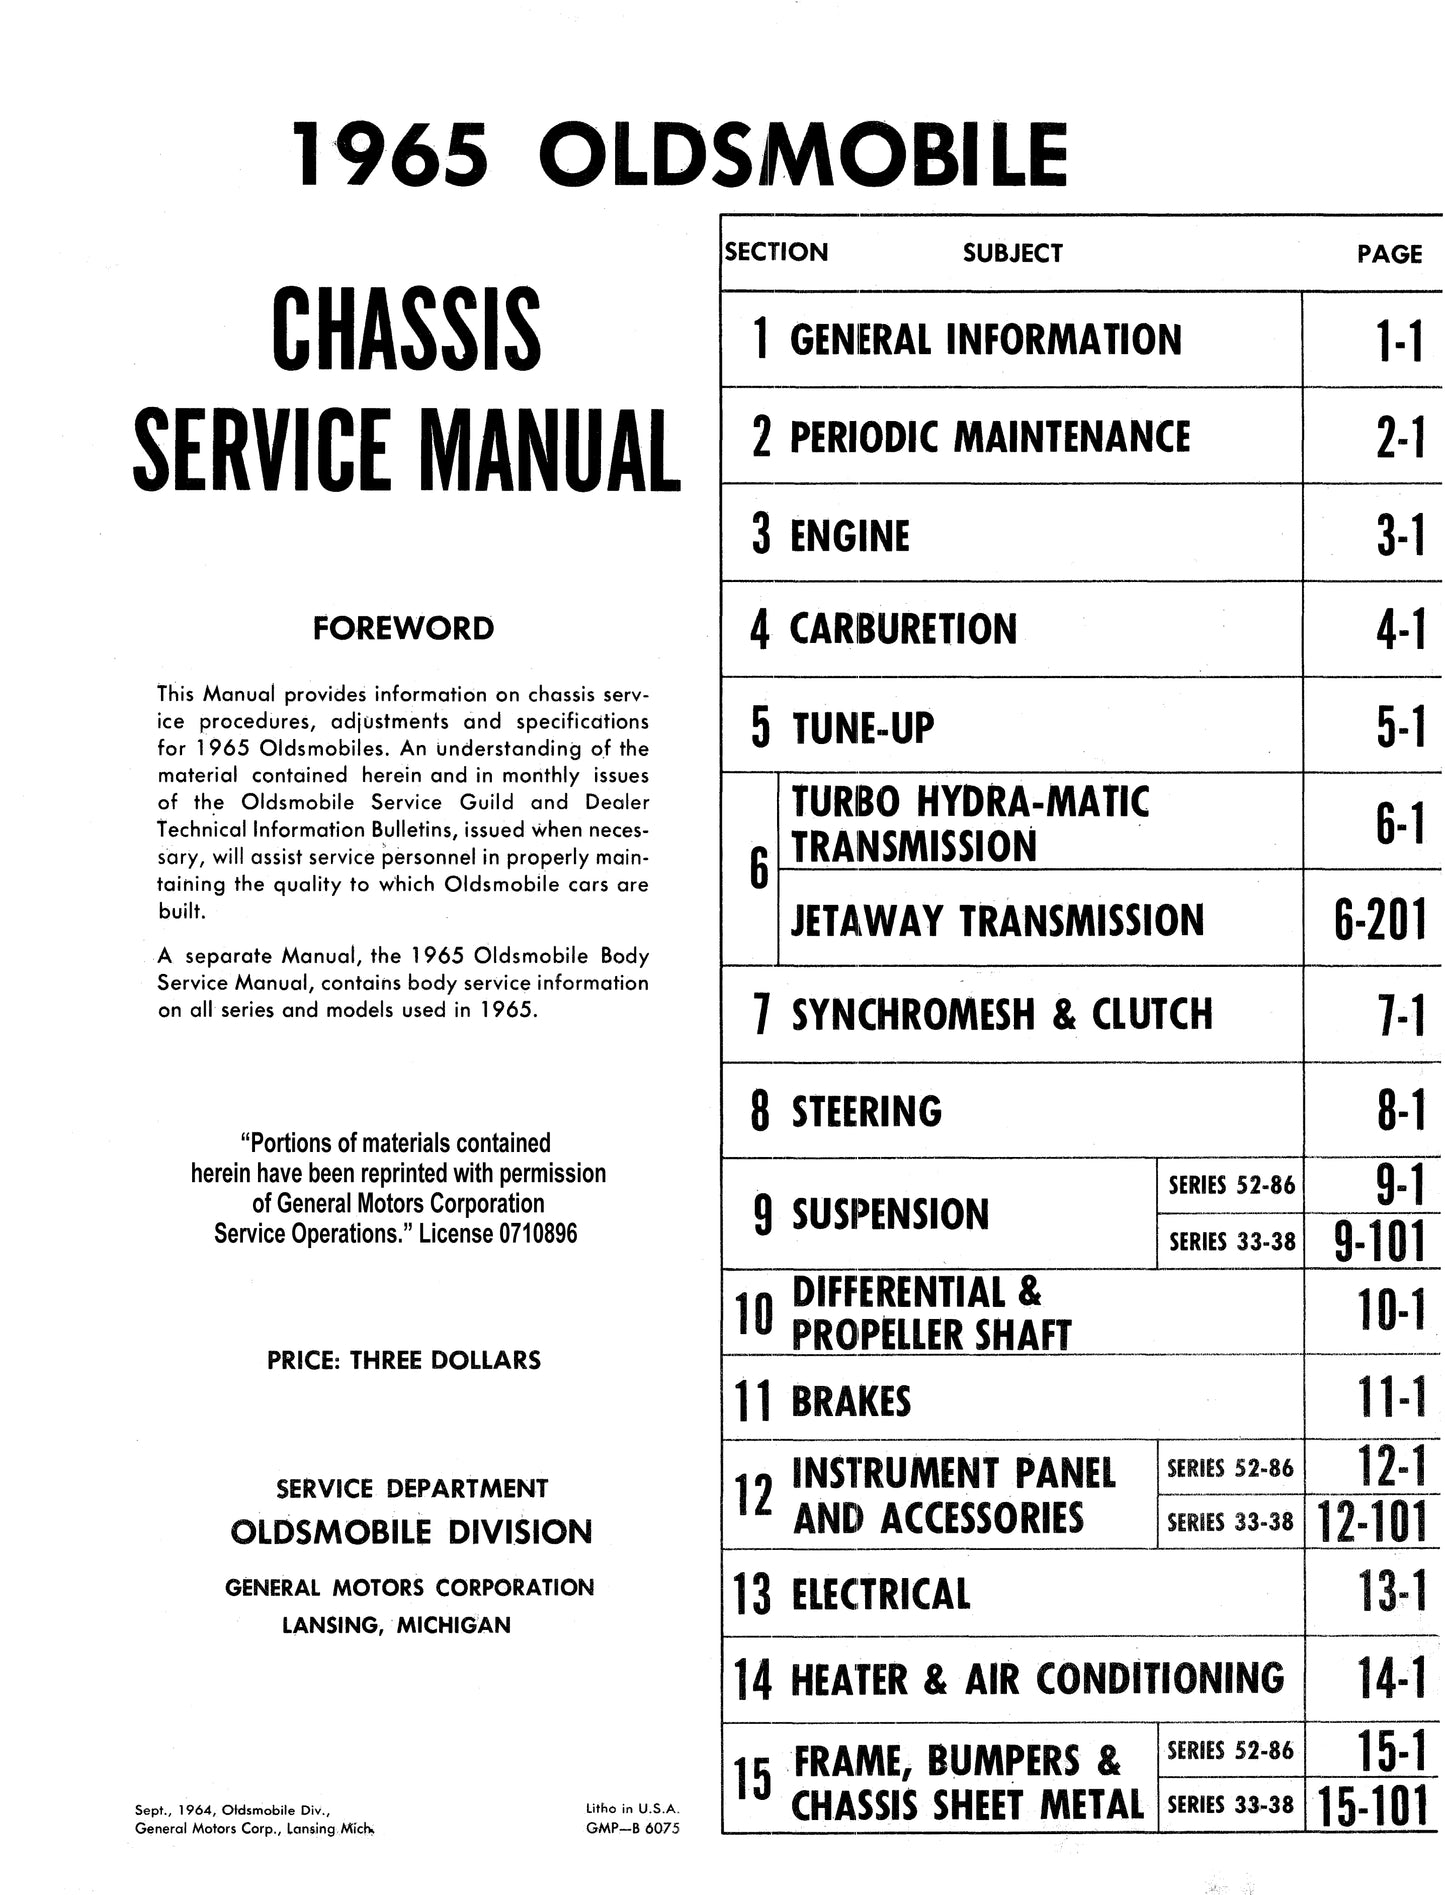 1965 Oldsmobile Shop Manual & Body Manual - All Models